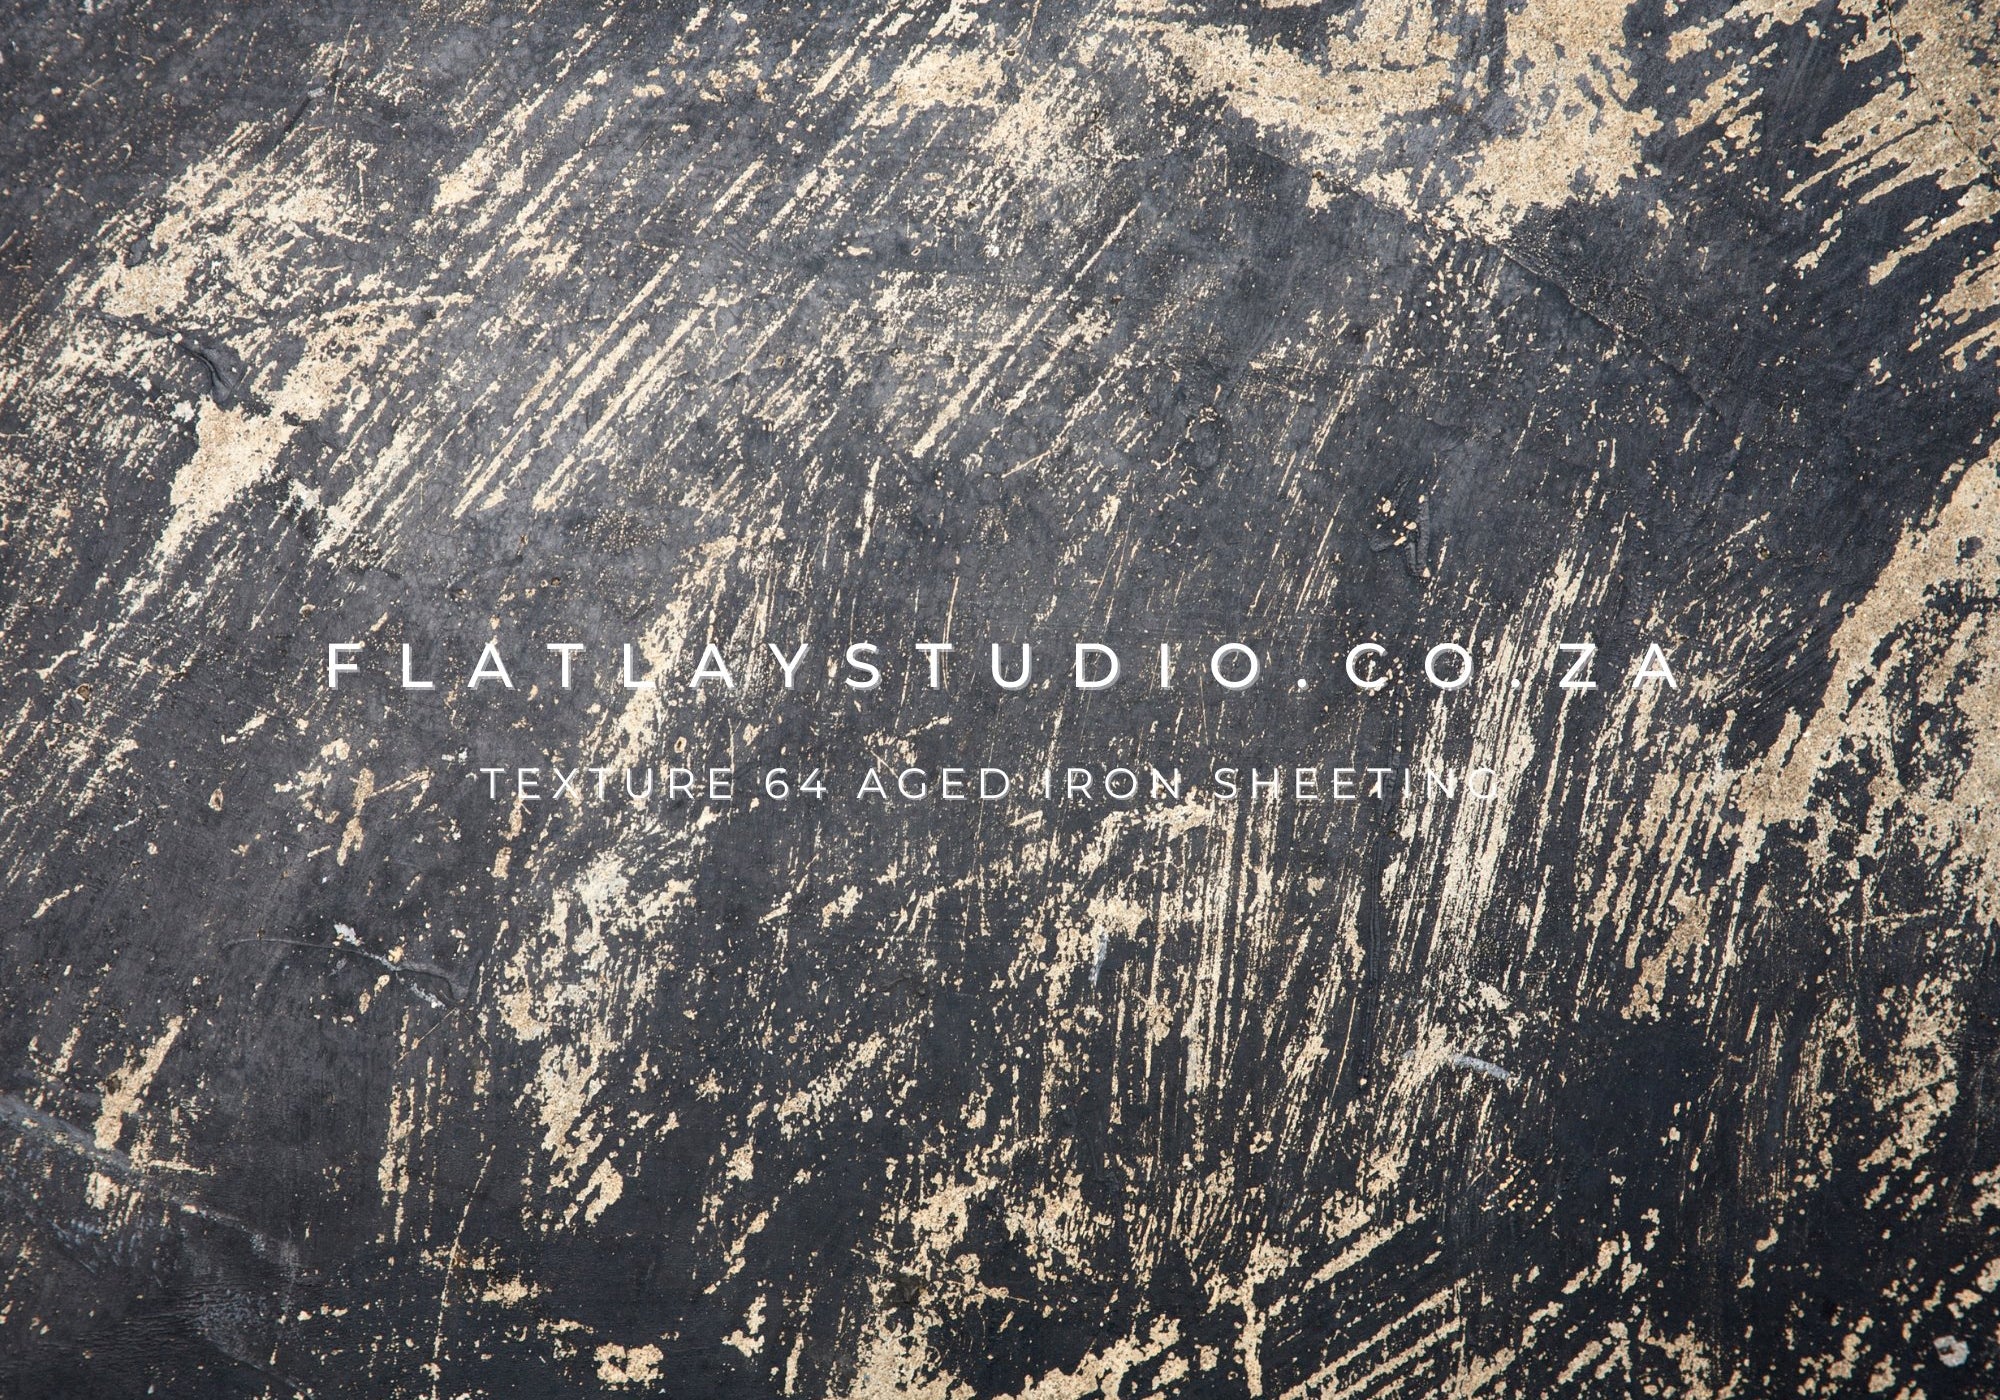 Texture 64 Aged Iron Sheeting - FlatlayStudio